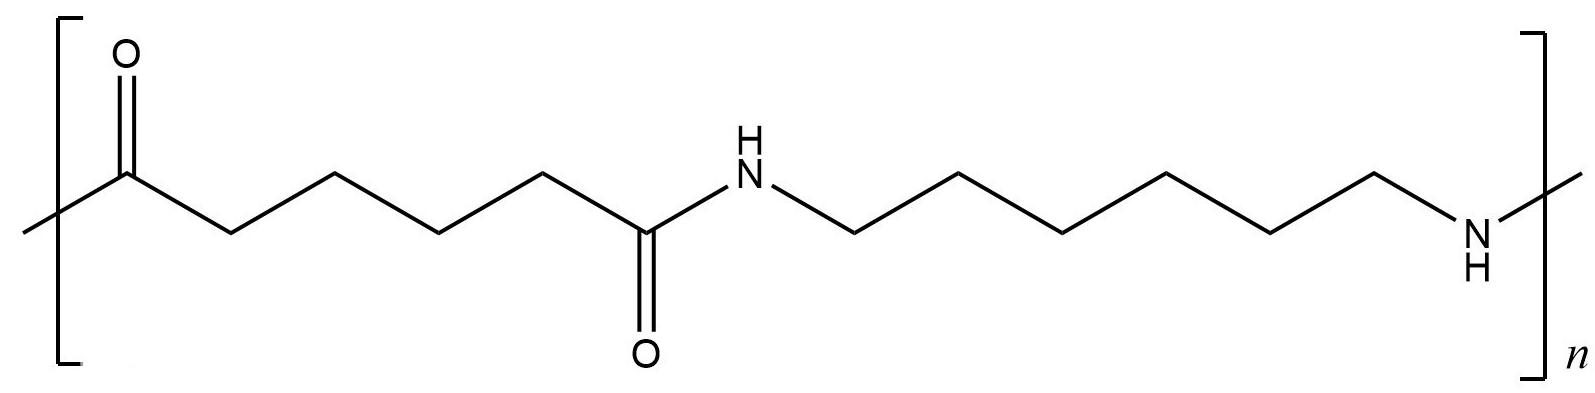 Polyamide 66_1595_393